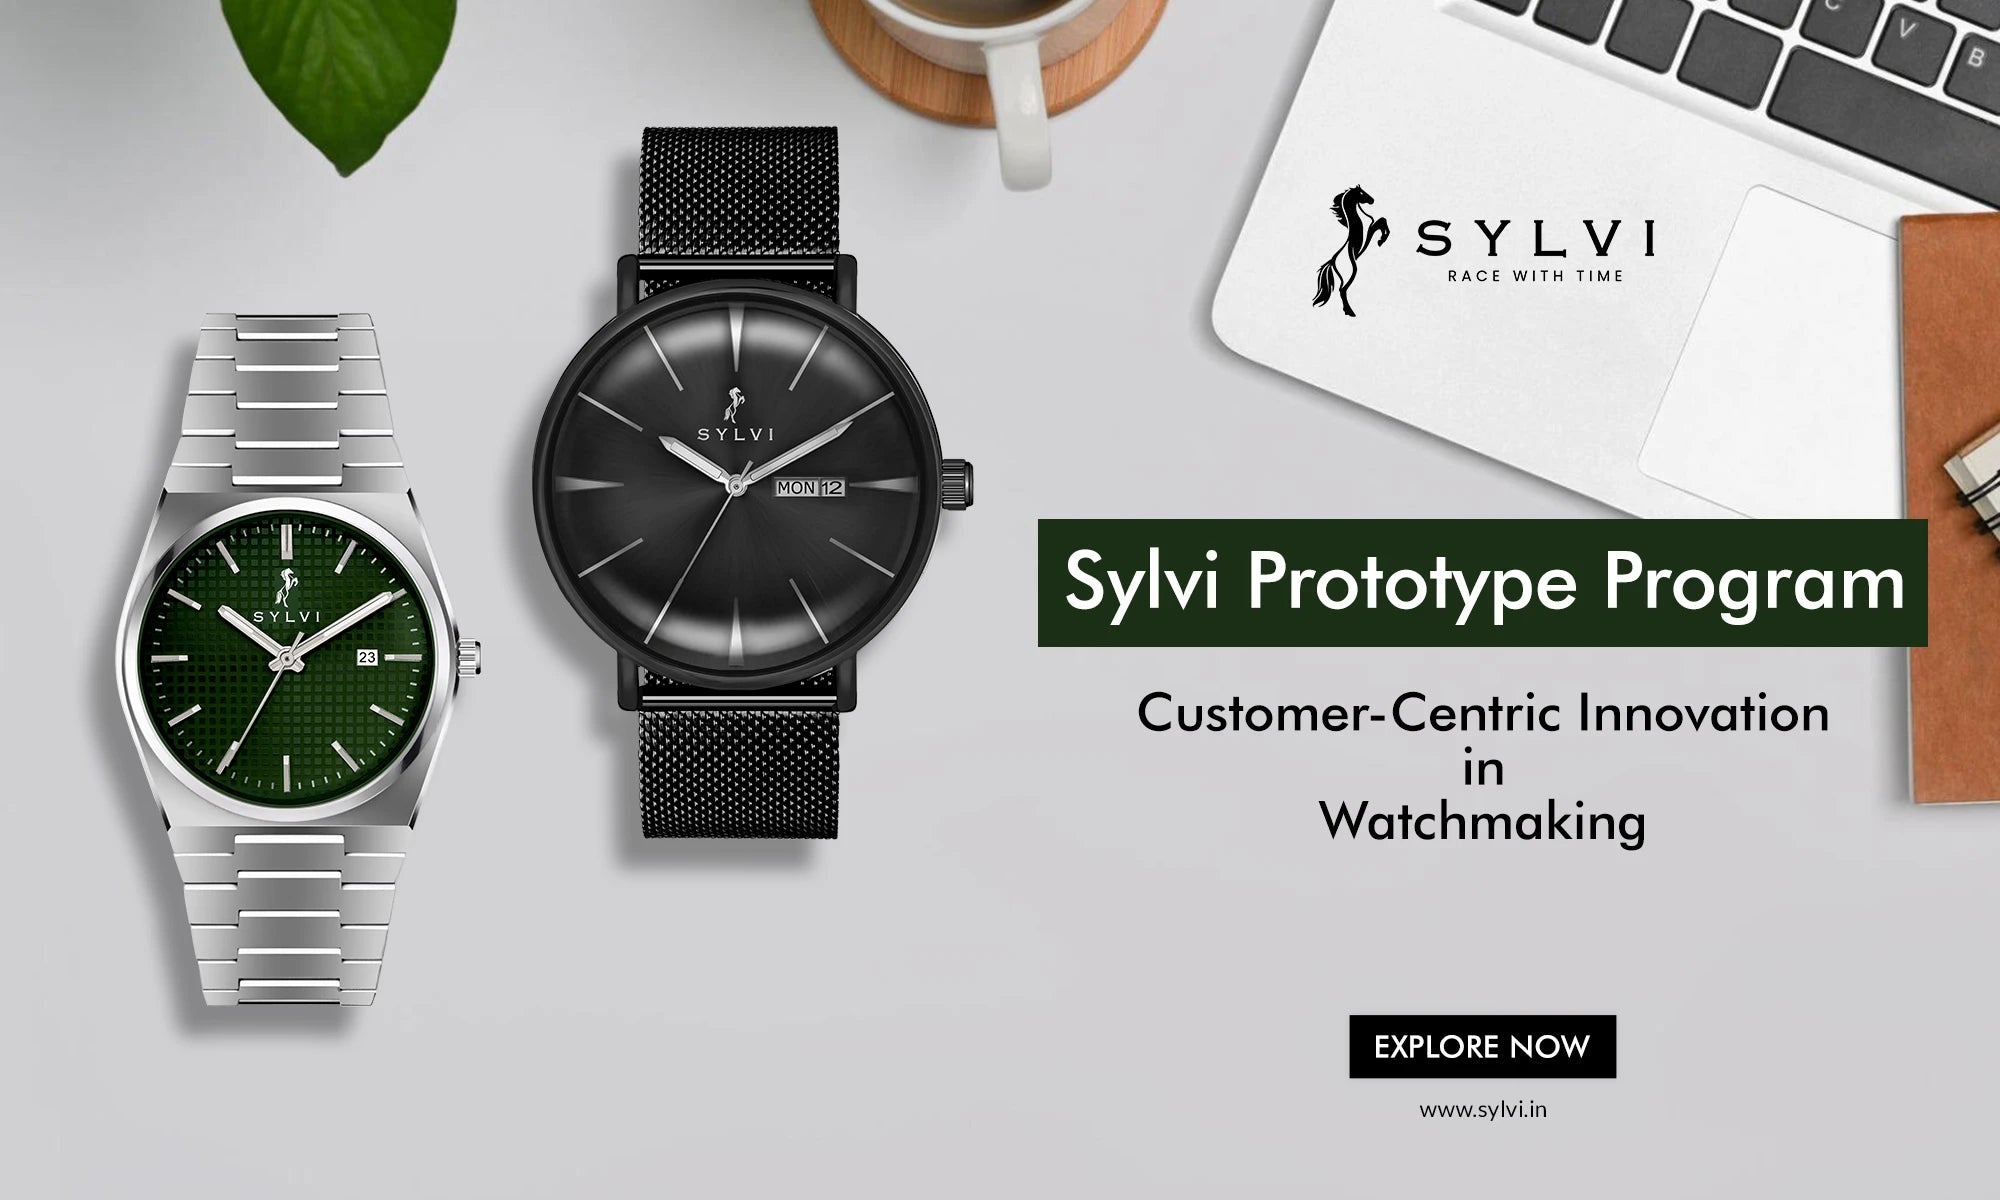 Unlocking Excellence: The Sylvi Prototype Program Redefining Watchmaking